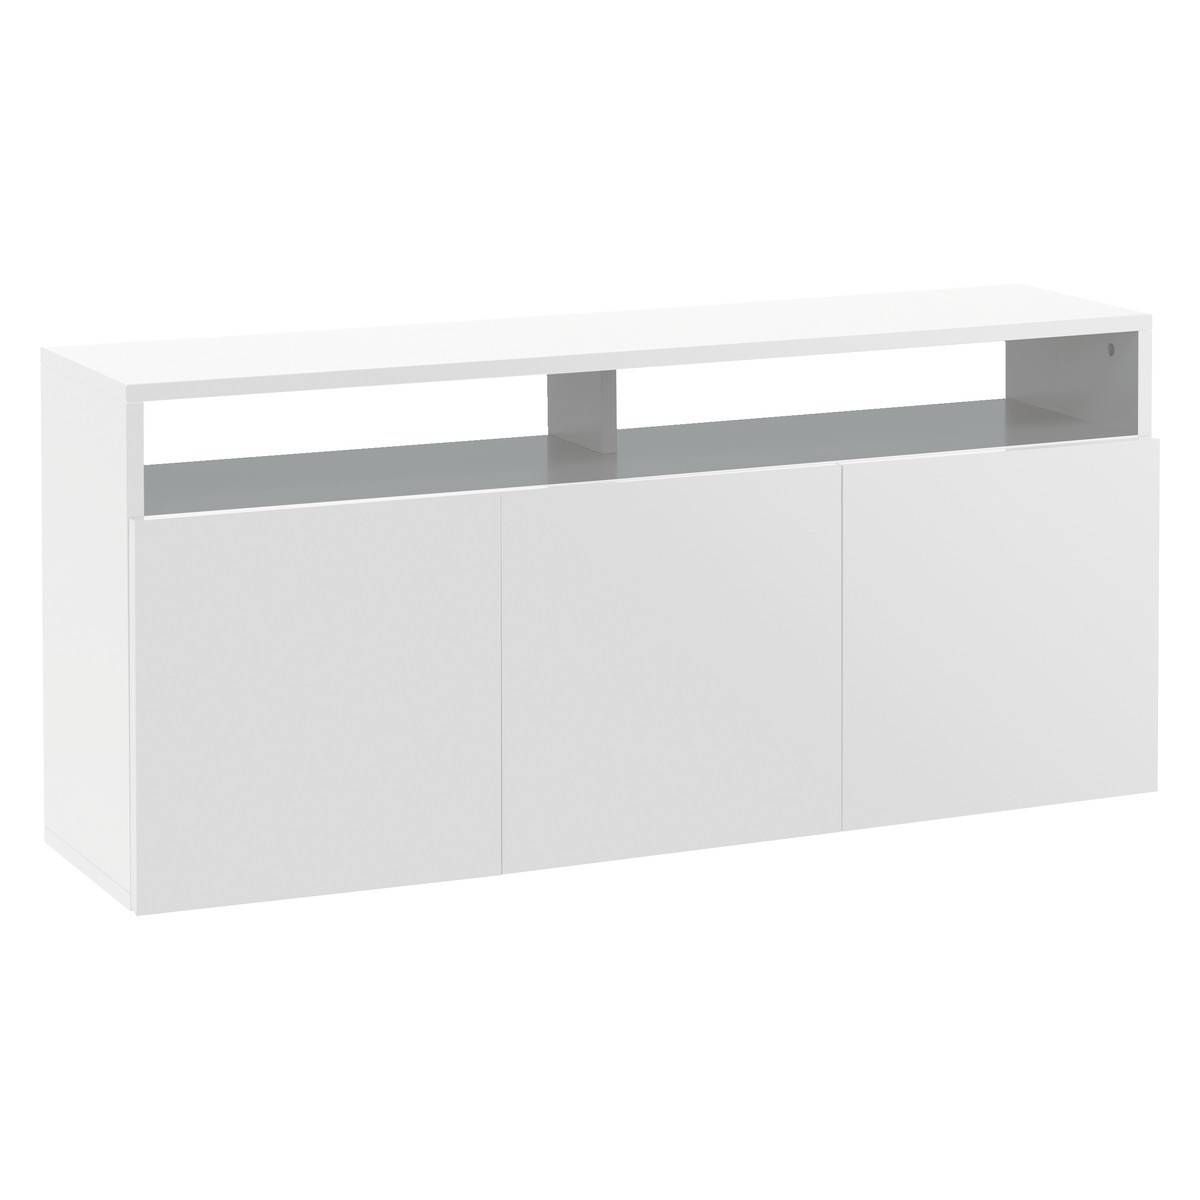 Kubrik White High Gloss Large Sideboard | Buy Now At Habitat Uk Throughout White Wood Sideboards (View 2 of 15)